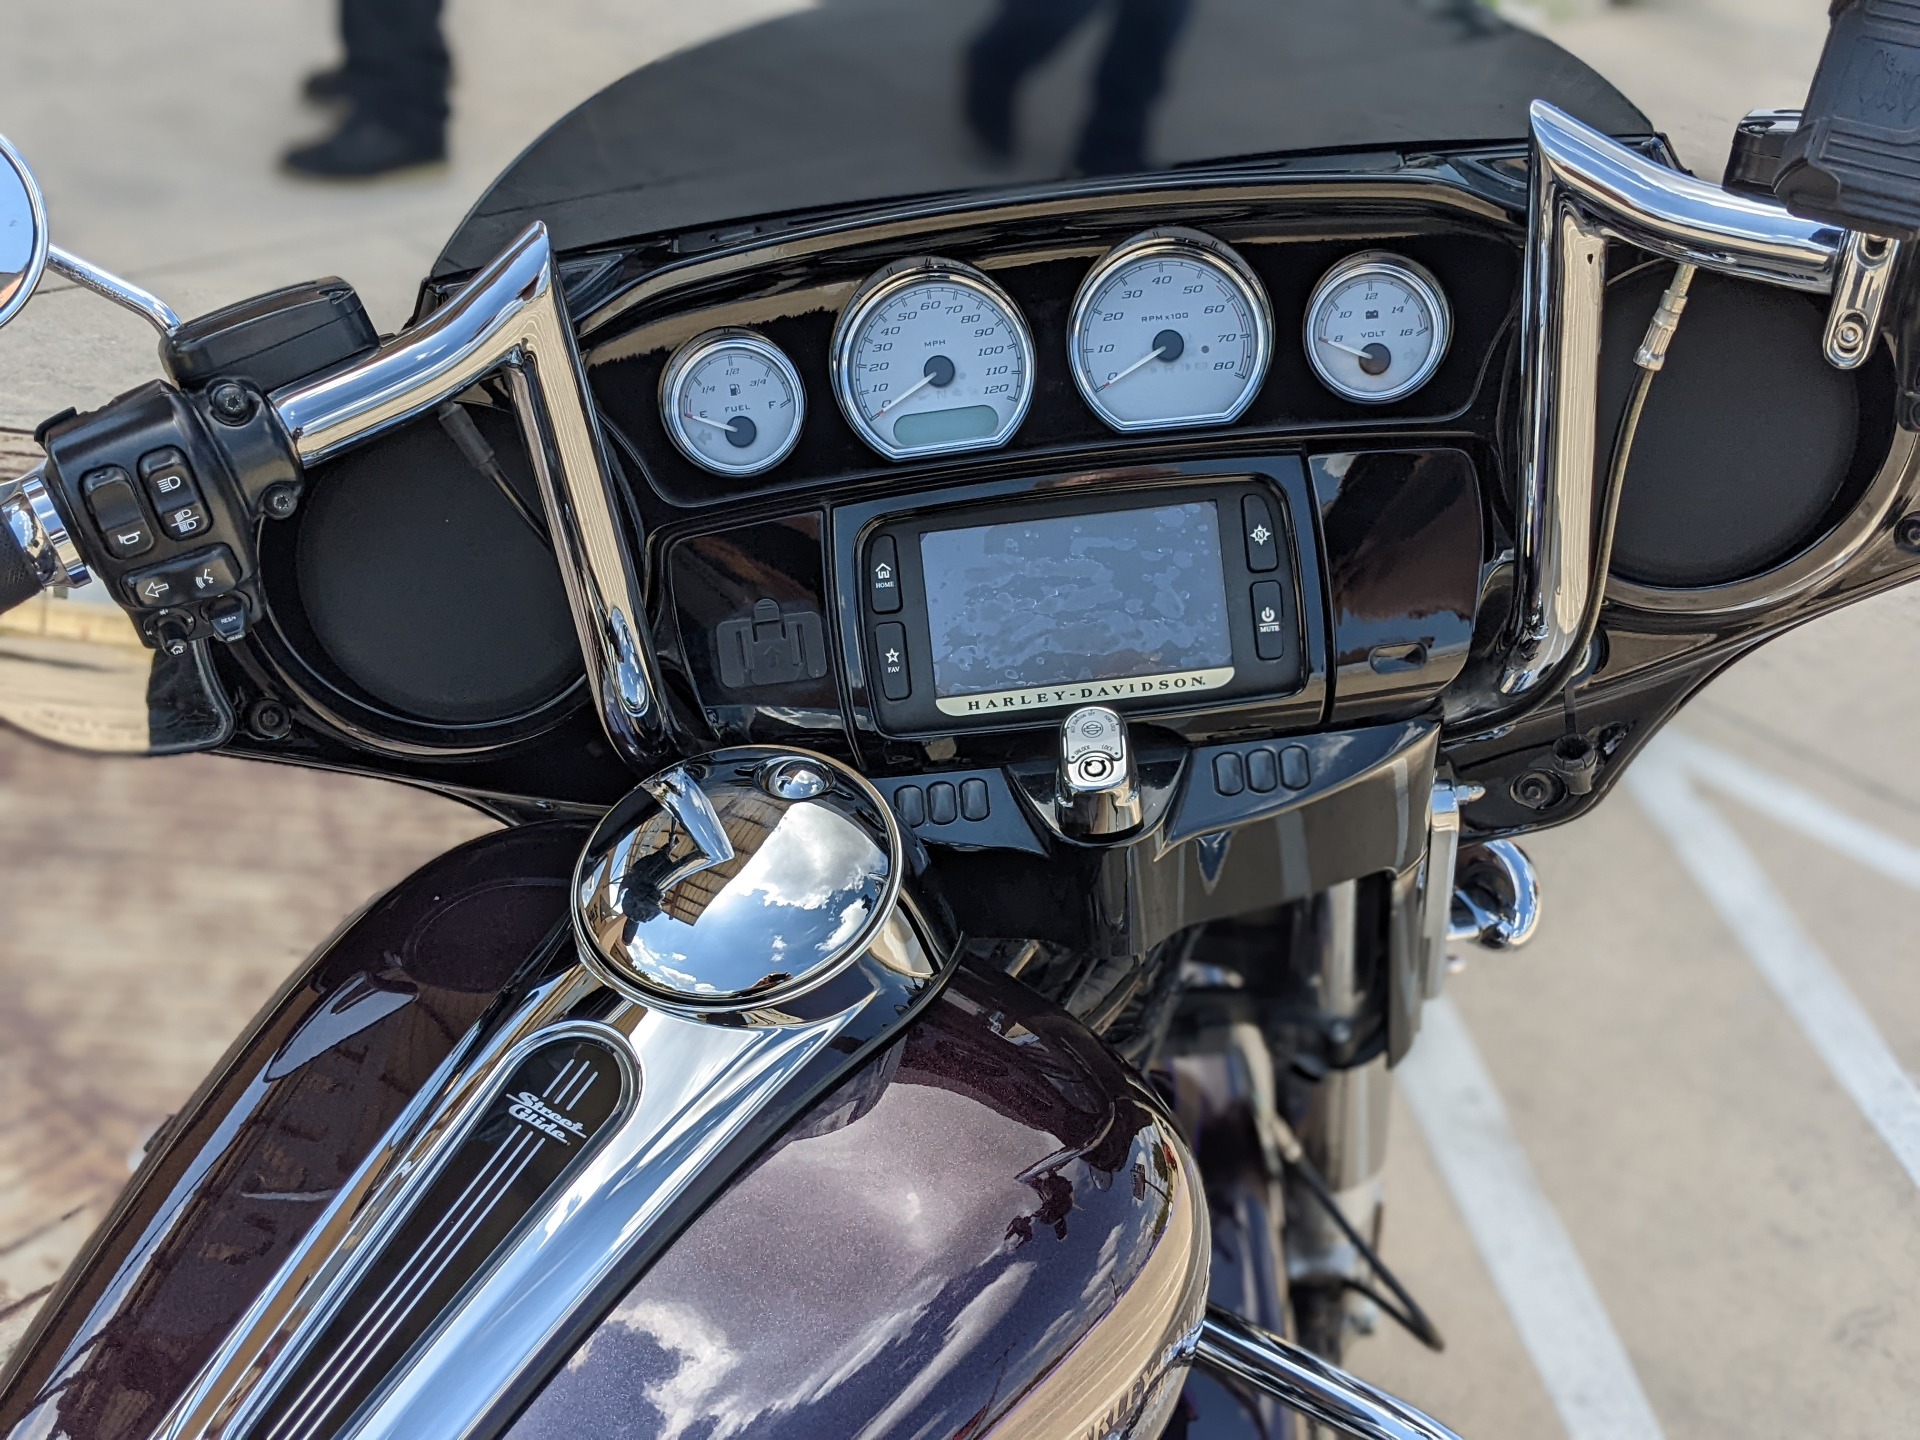 2017 Harley-Davidson Street Glide® Special in San Antonio, Texas - Photo 10